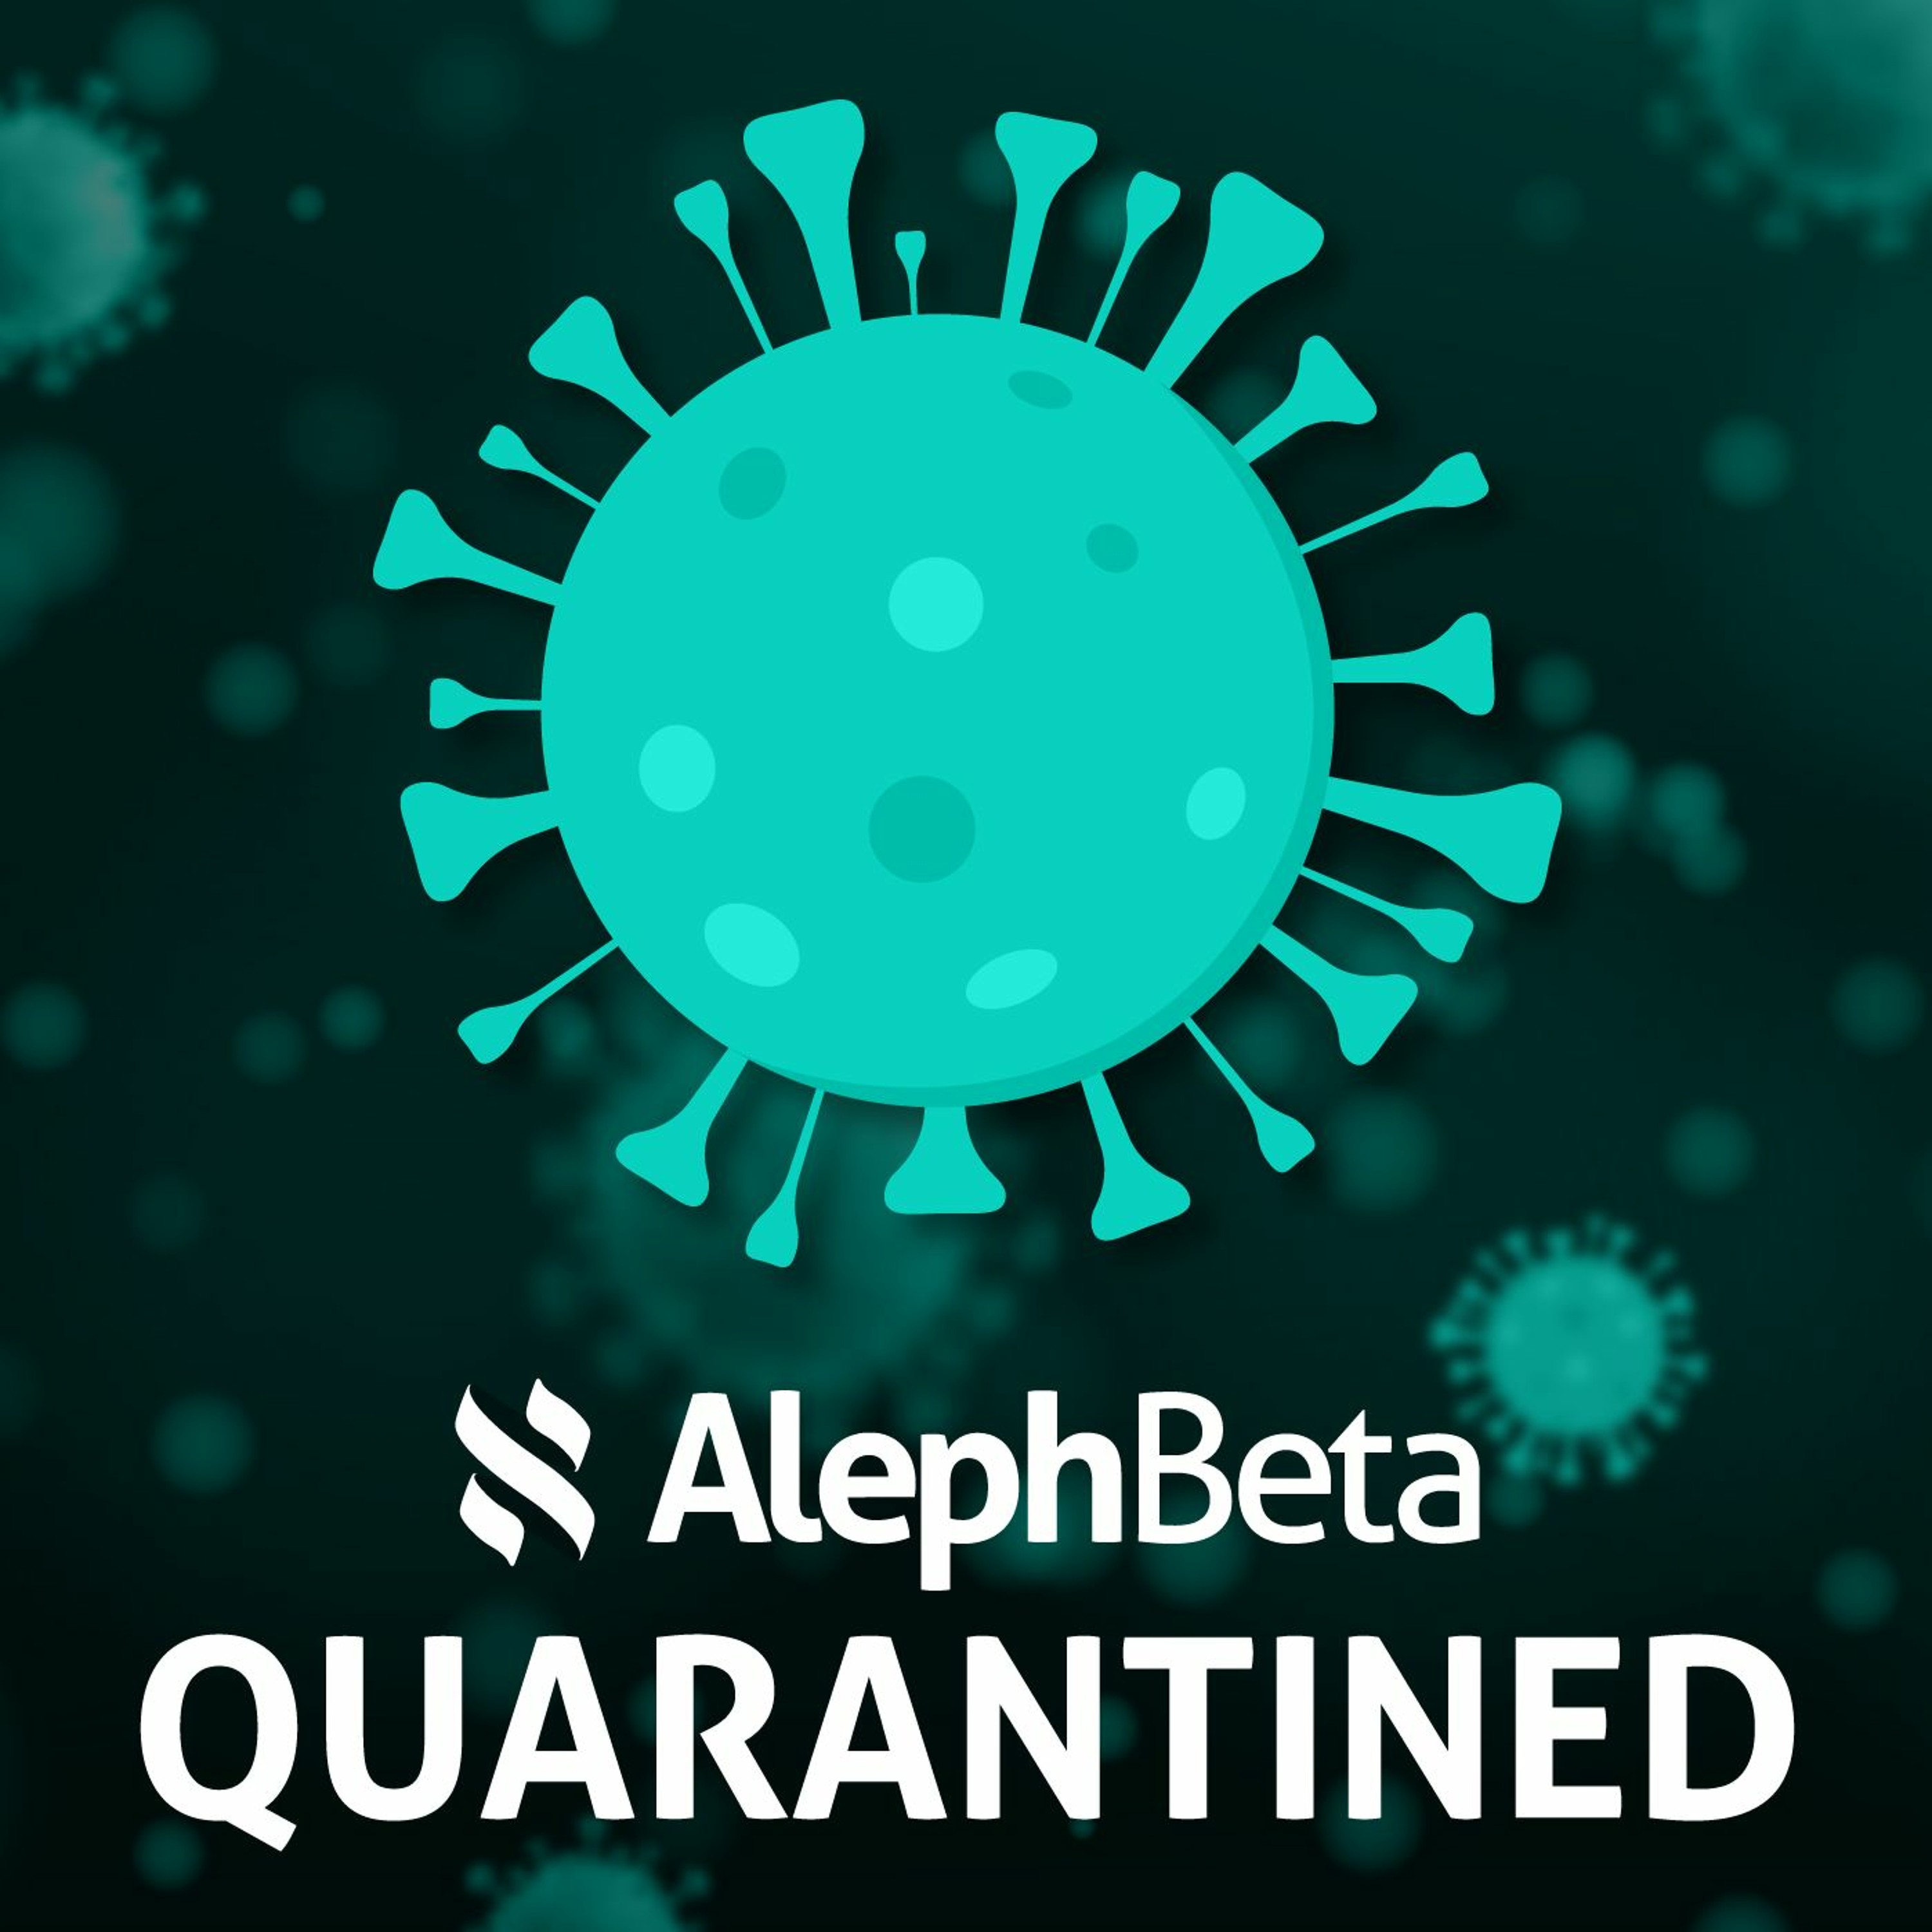 1. Aleph Beta Quarantined: An Introduction